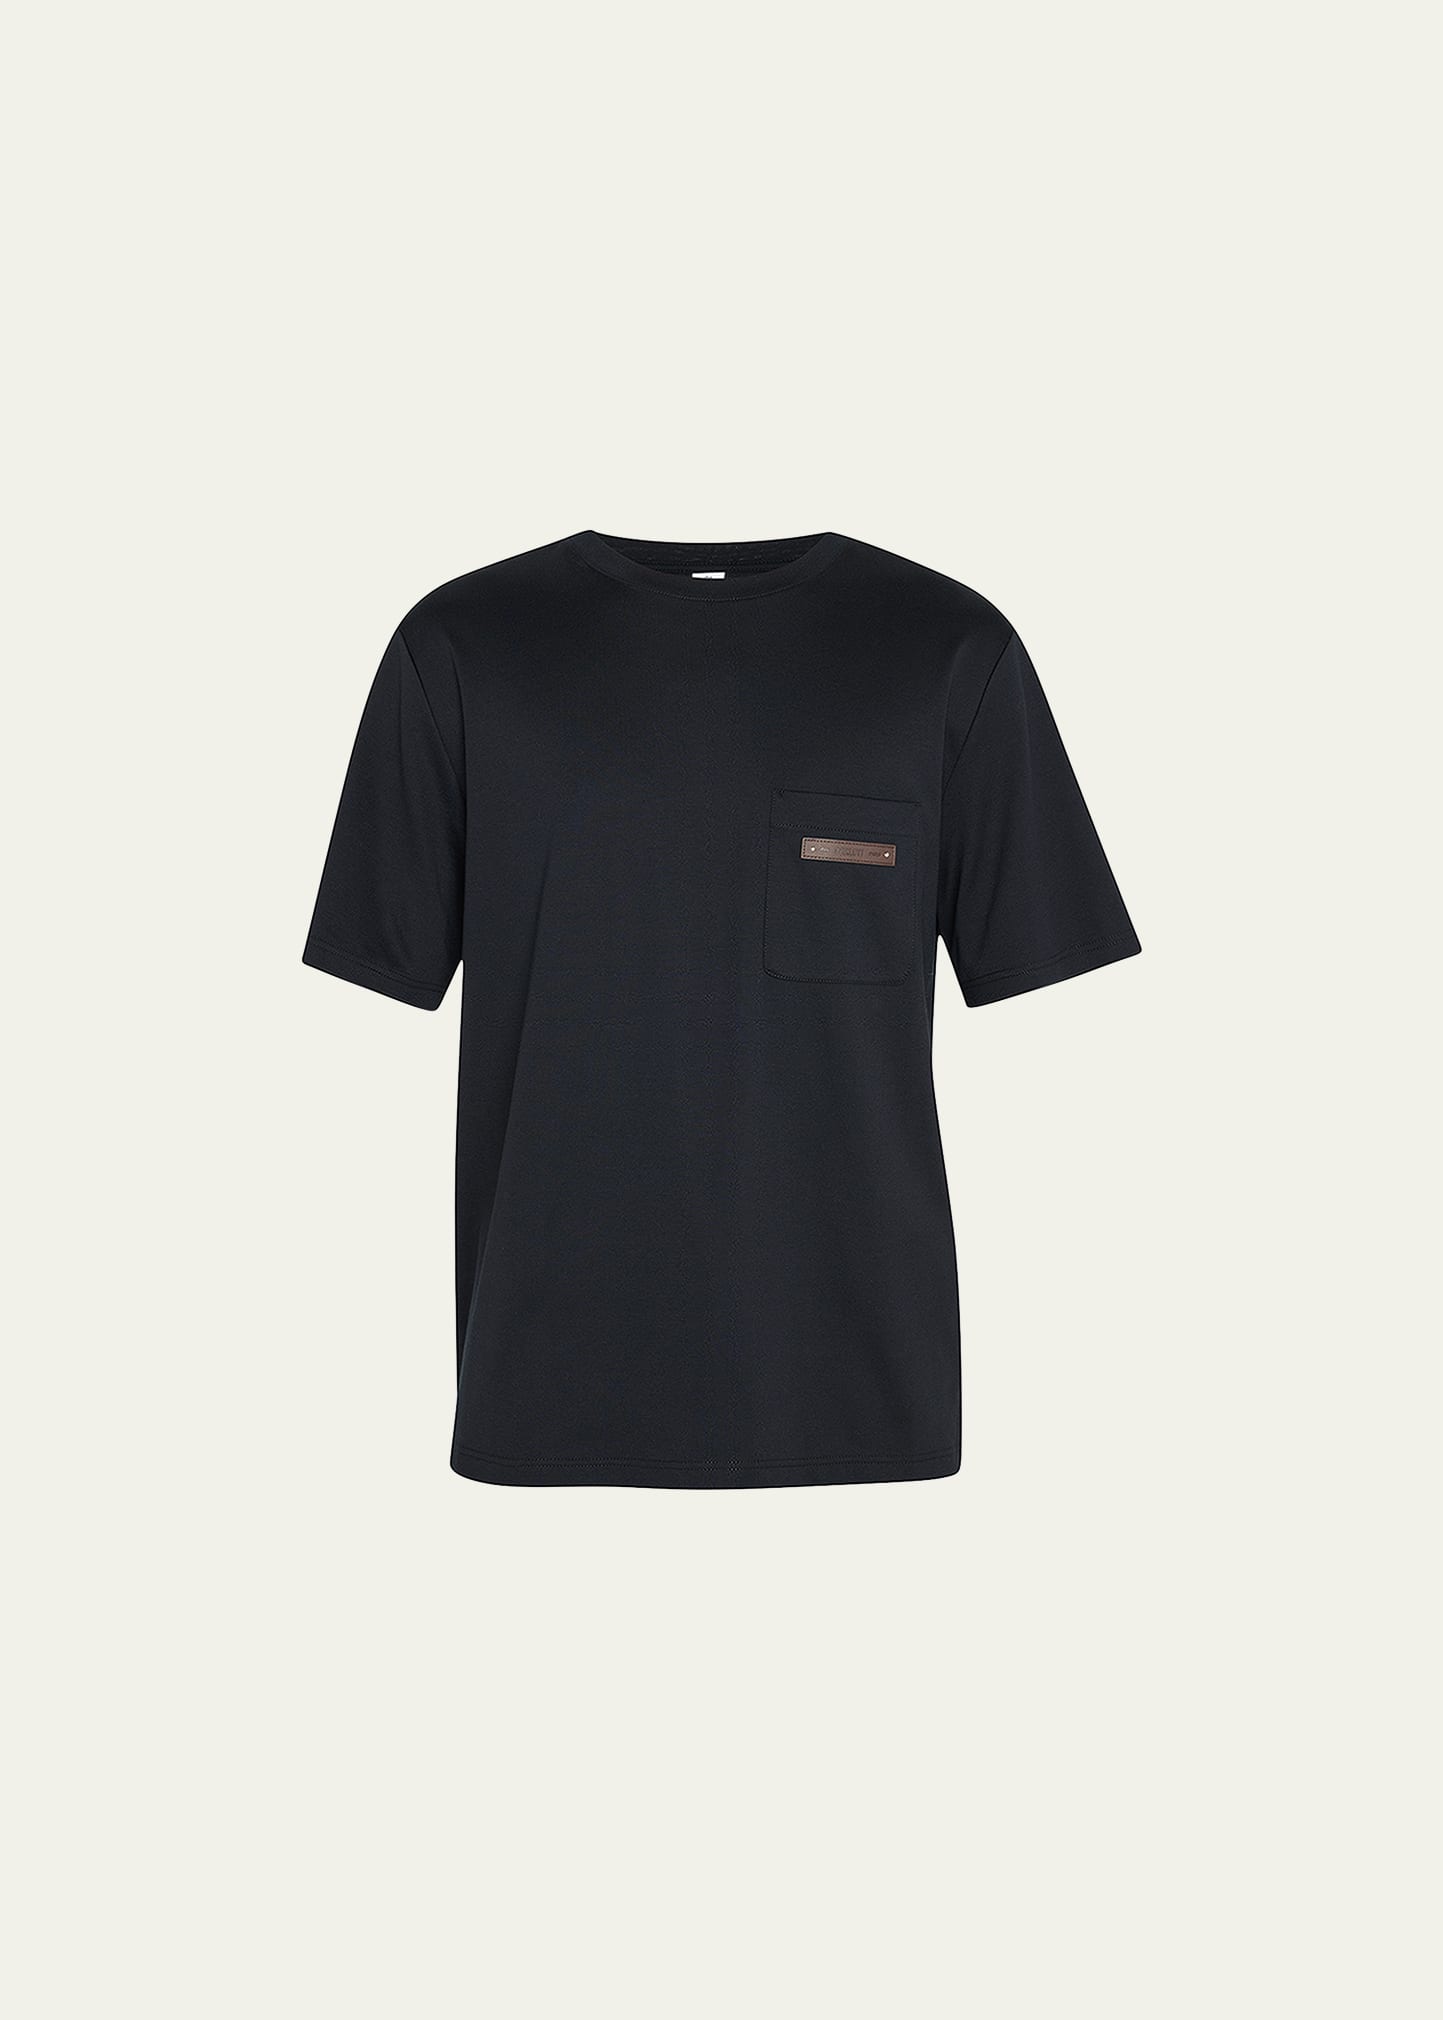 Berluti Men's Leather Tab Crewneck T-Shirt